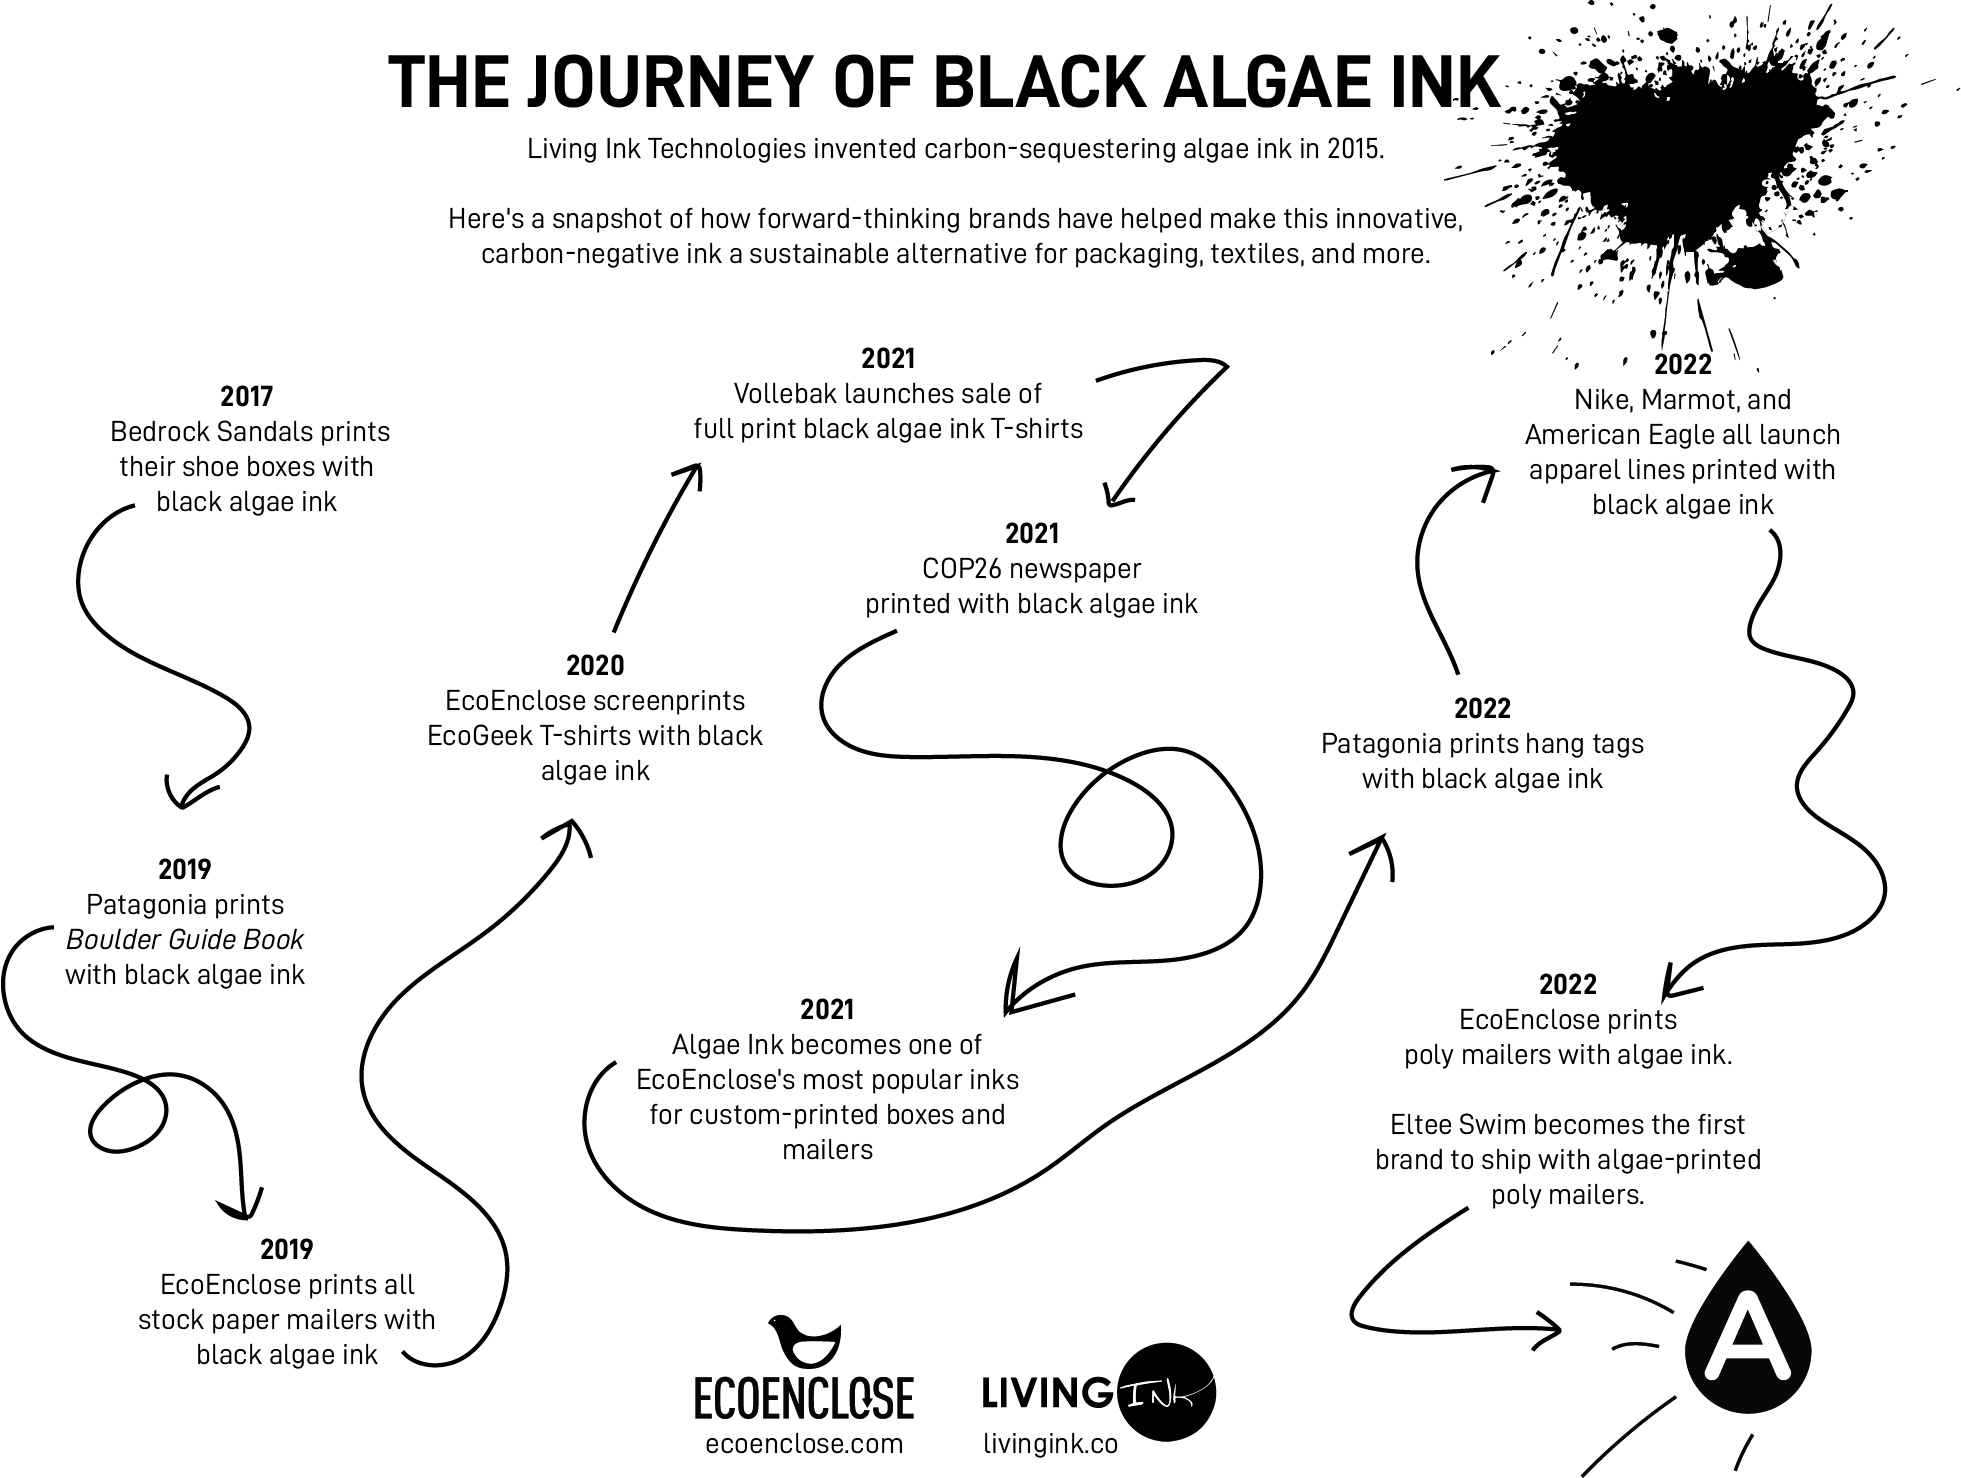 The journey of black algae ink